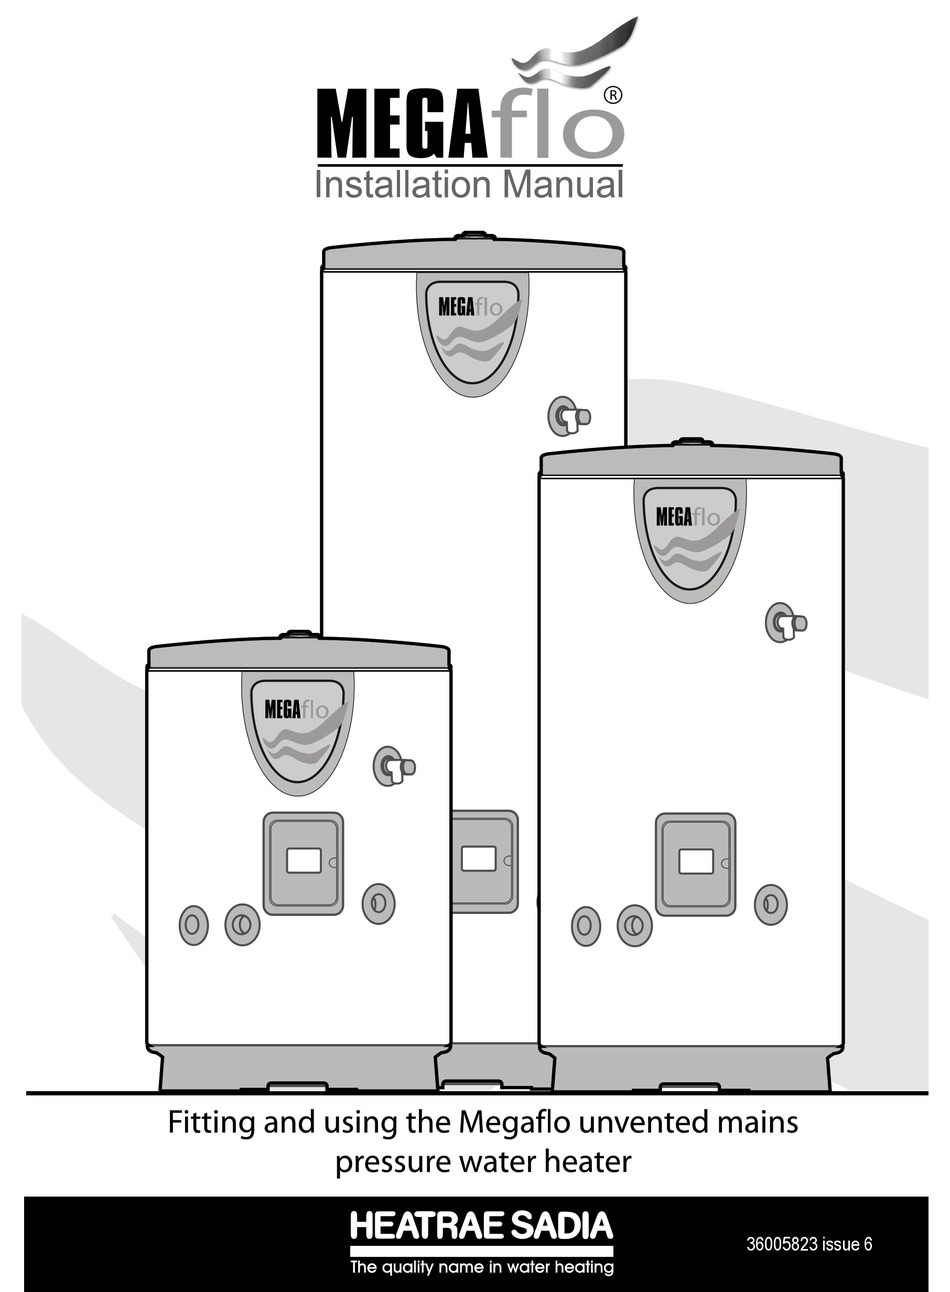 HEATRAE SADIA MEGAFLO INSTALLATION MANUAL Pdf Download | ManualsLib  Megaflo Thermostat Wiring Diagram    ManualsLib